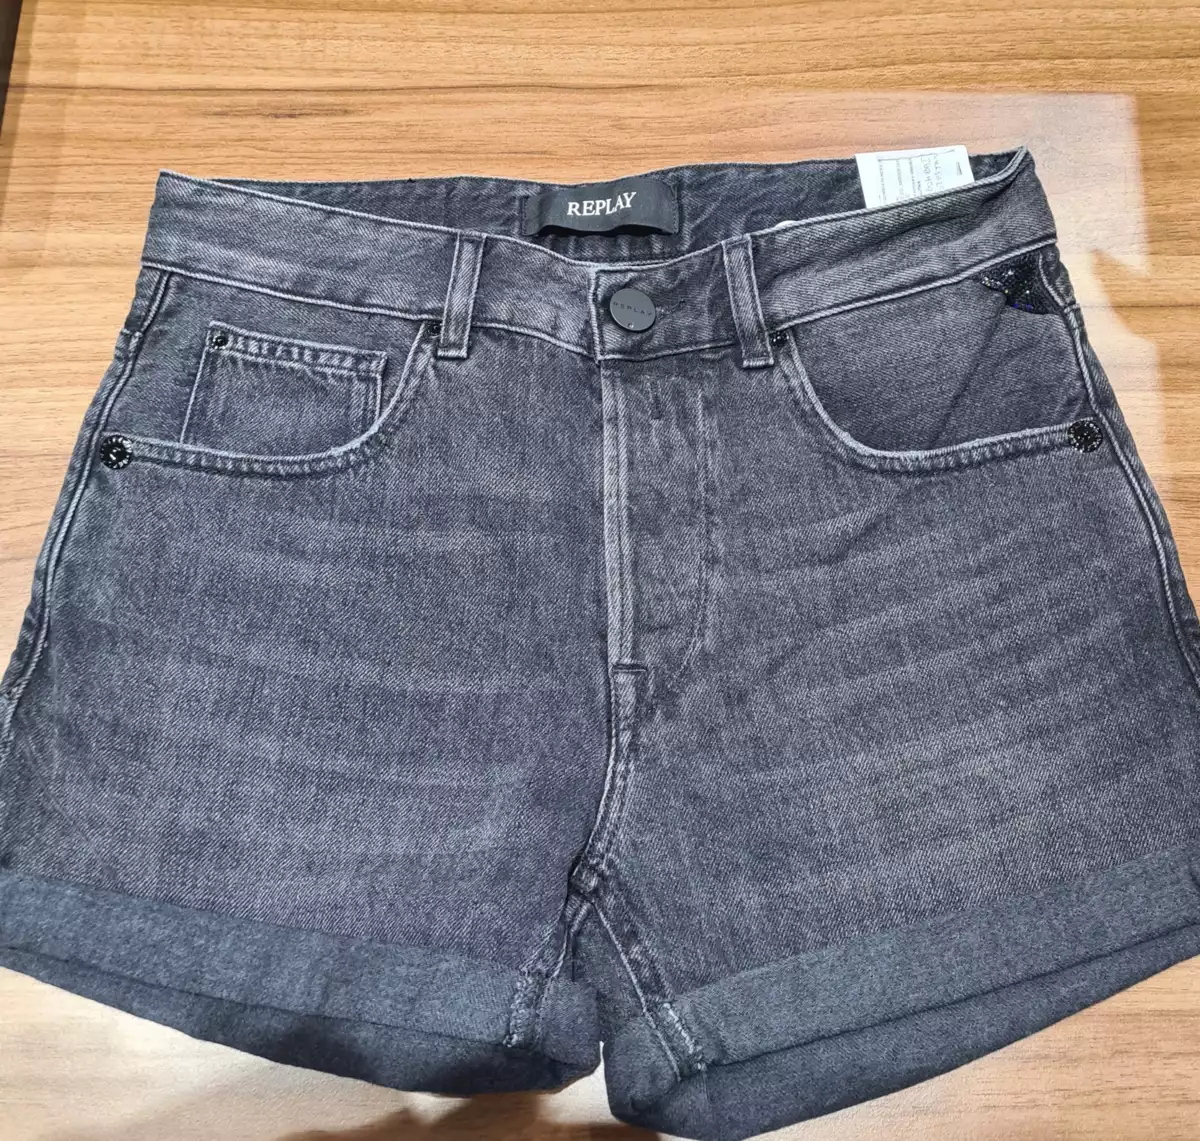 Shorts-11.25 oz black od black denim